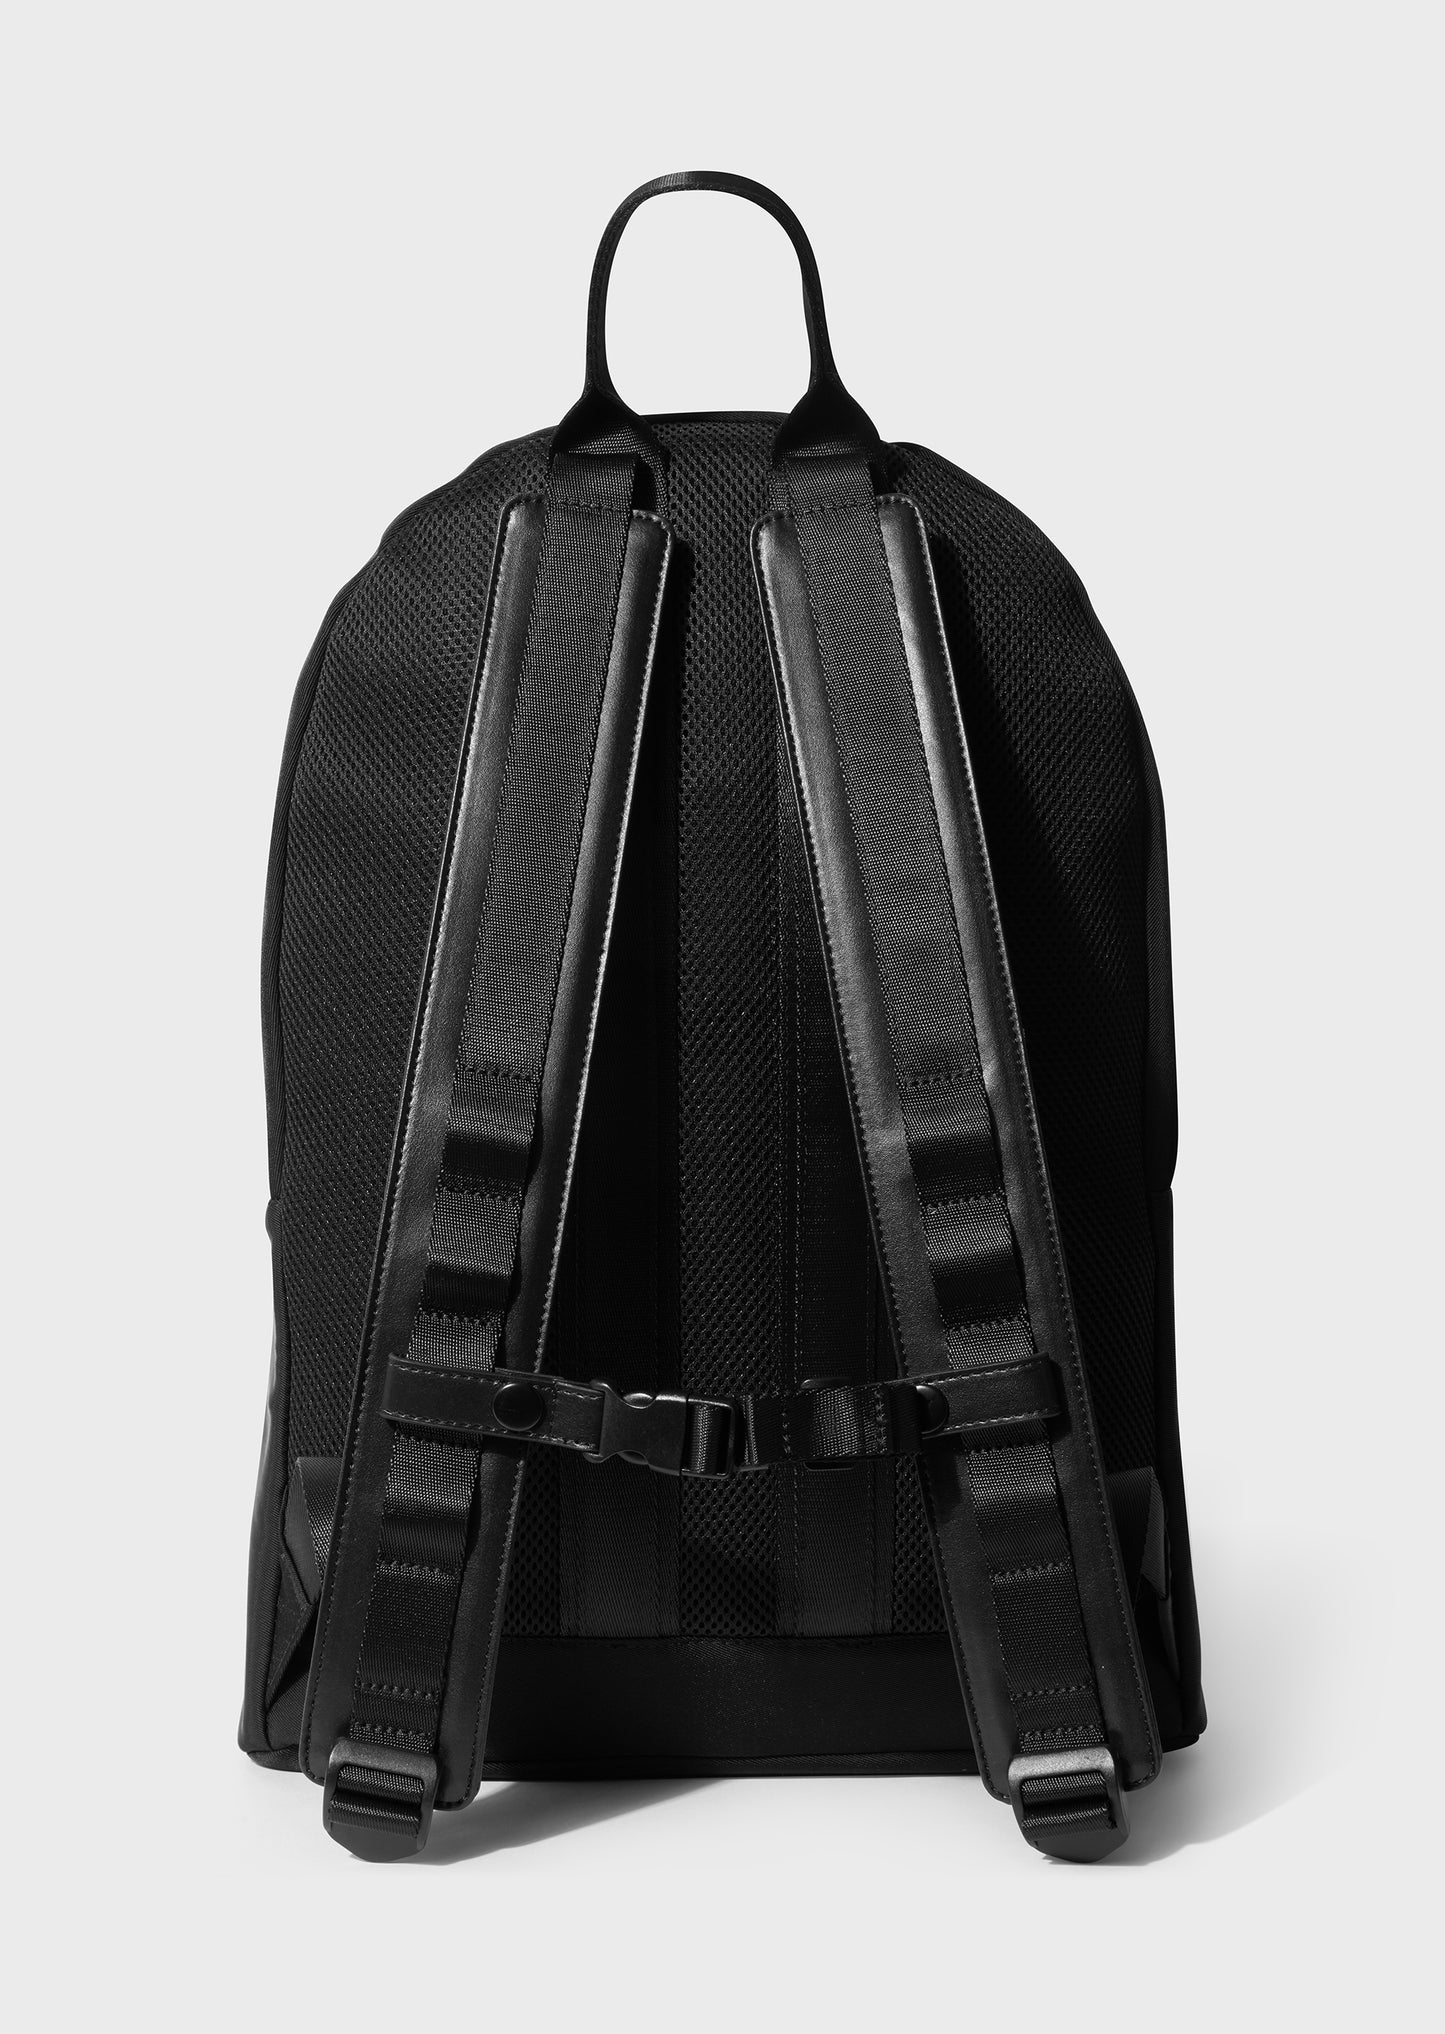 Lida Black Backpack